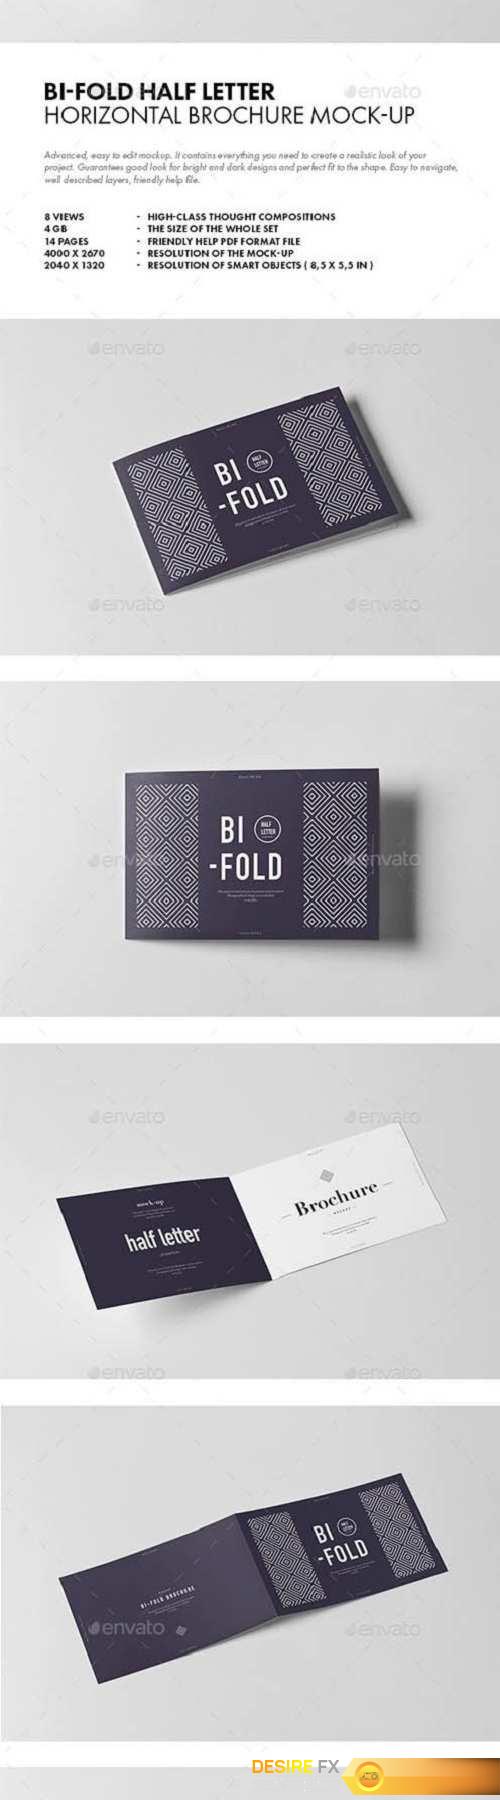 Bi-Fold Half Letter Horizontal Brochure Mock-up 20183042